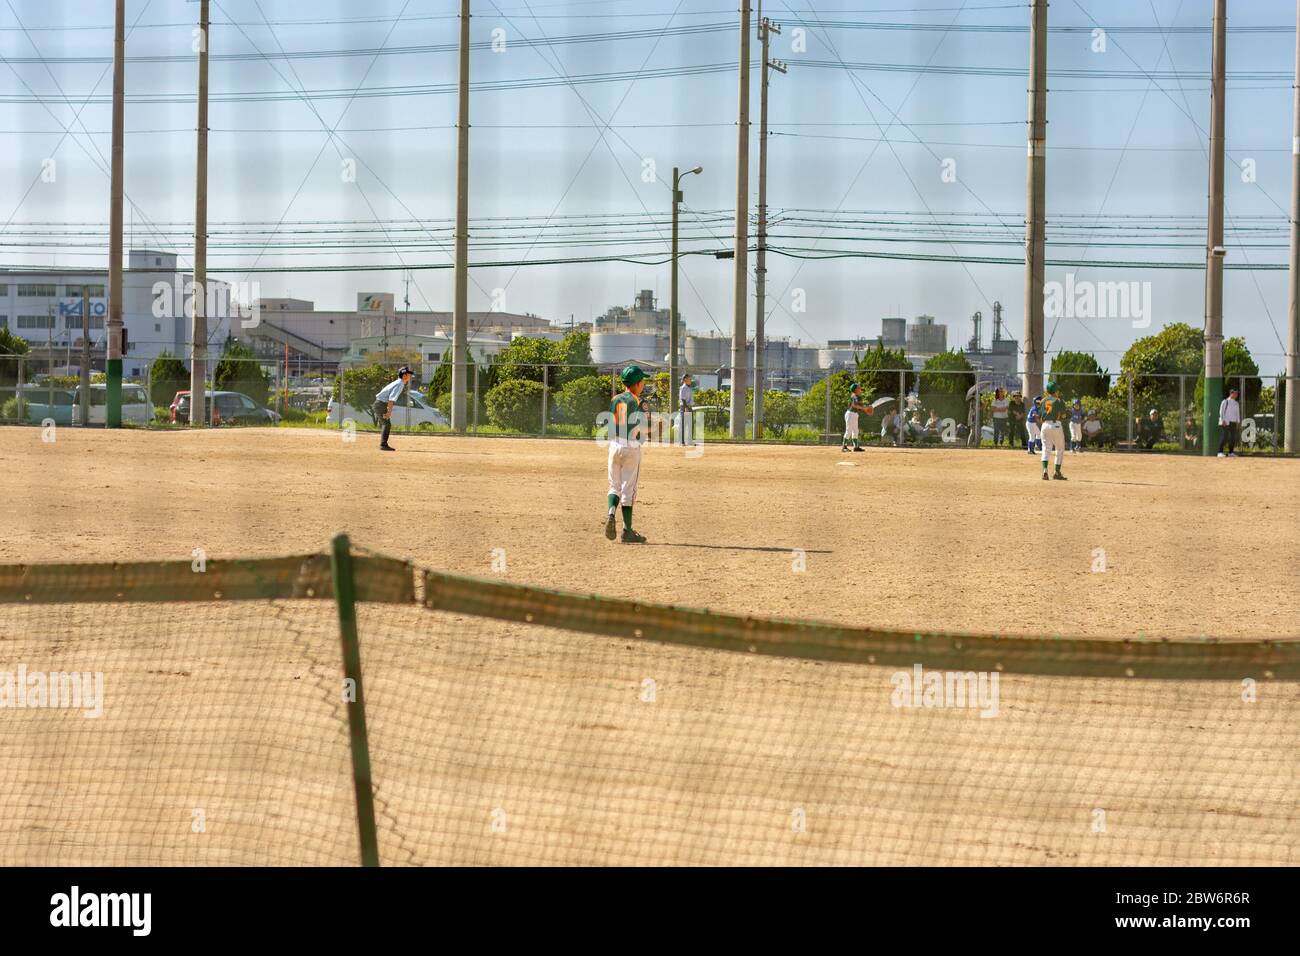 Osaka / Japan - September 30, 2017: Children playing baseball in the schoolyard in Osaka, Japan Stock Photo